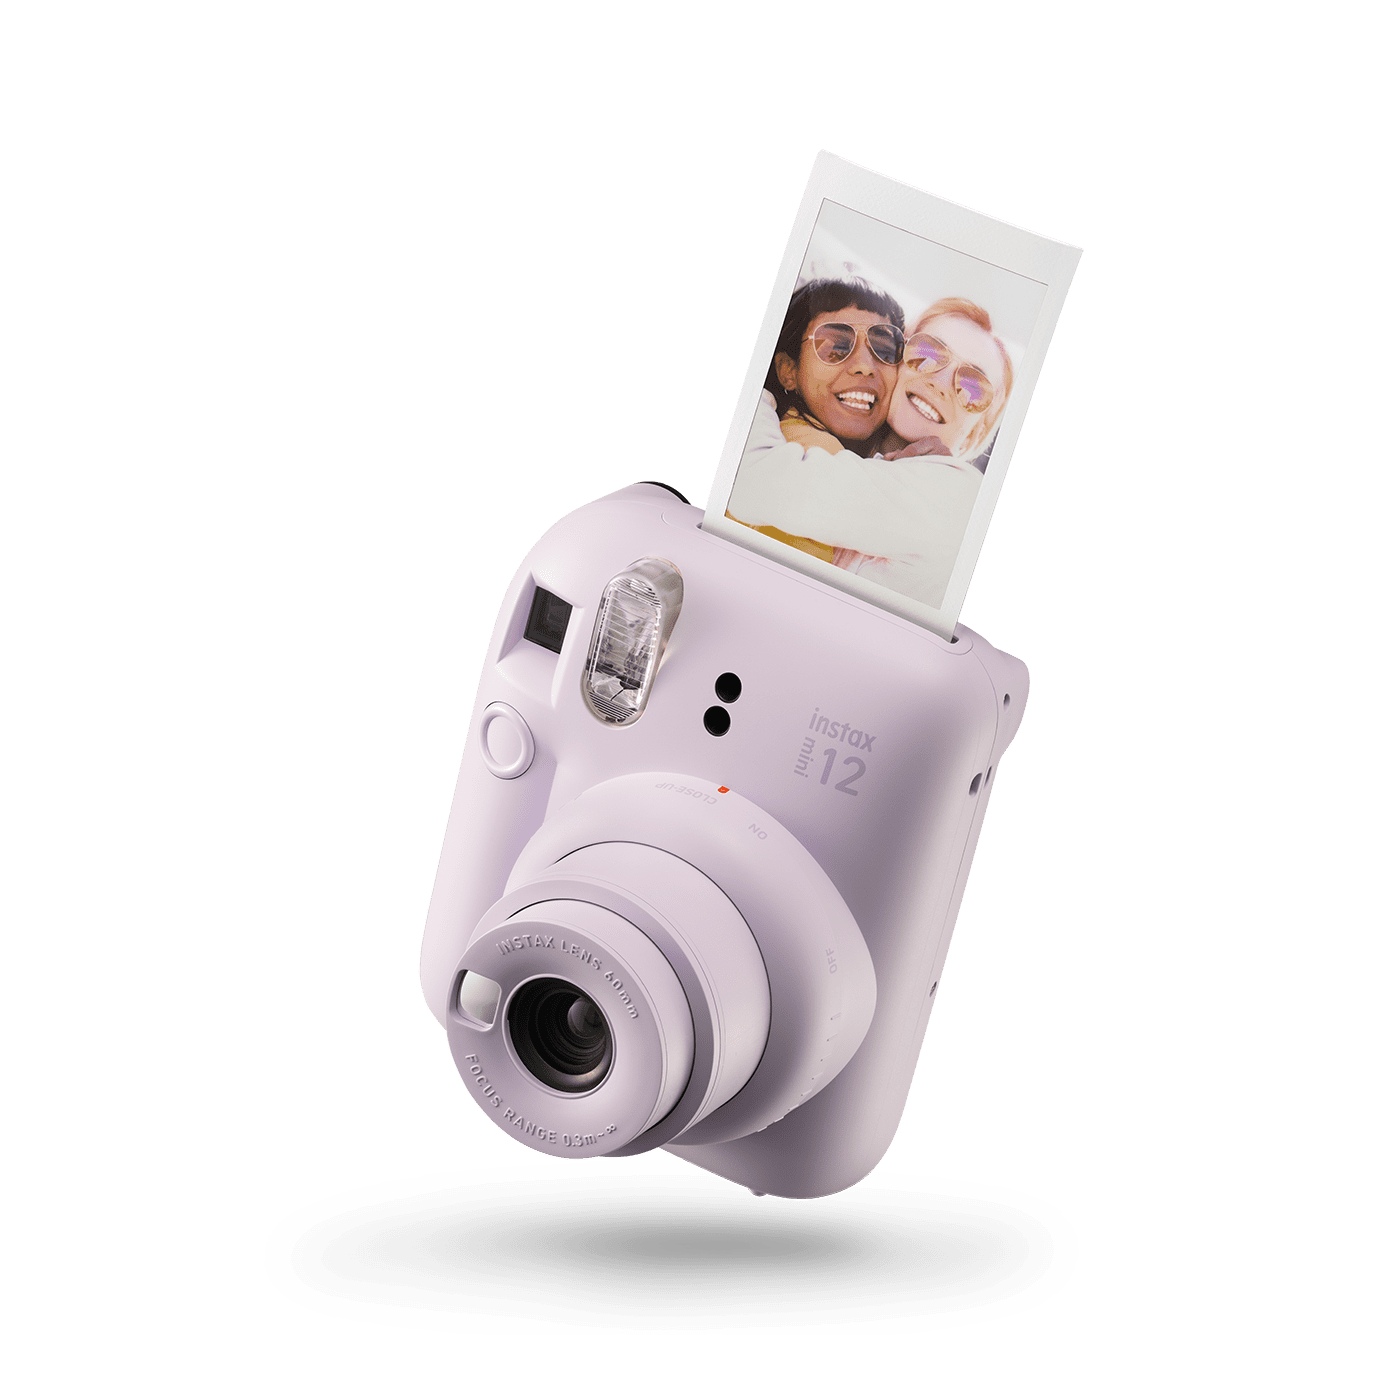 Buy Polaroid Instant Film - Polaroid US